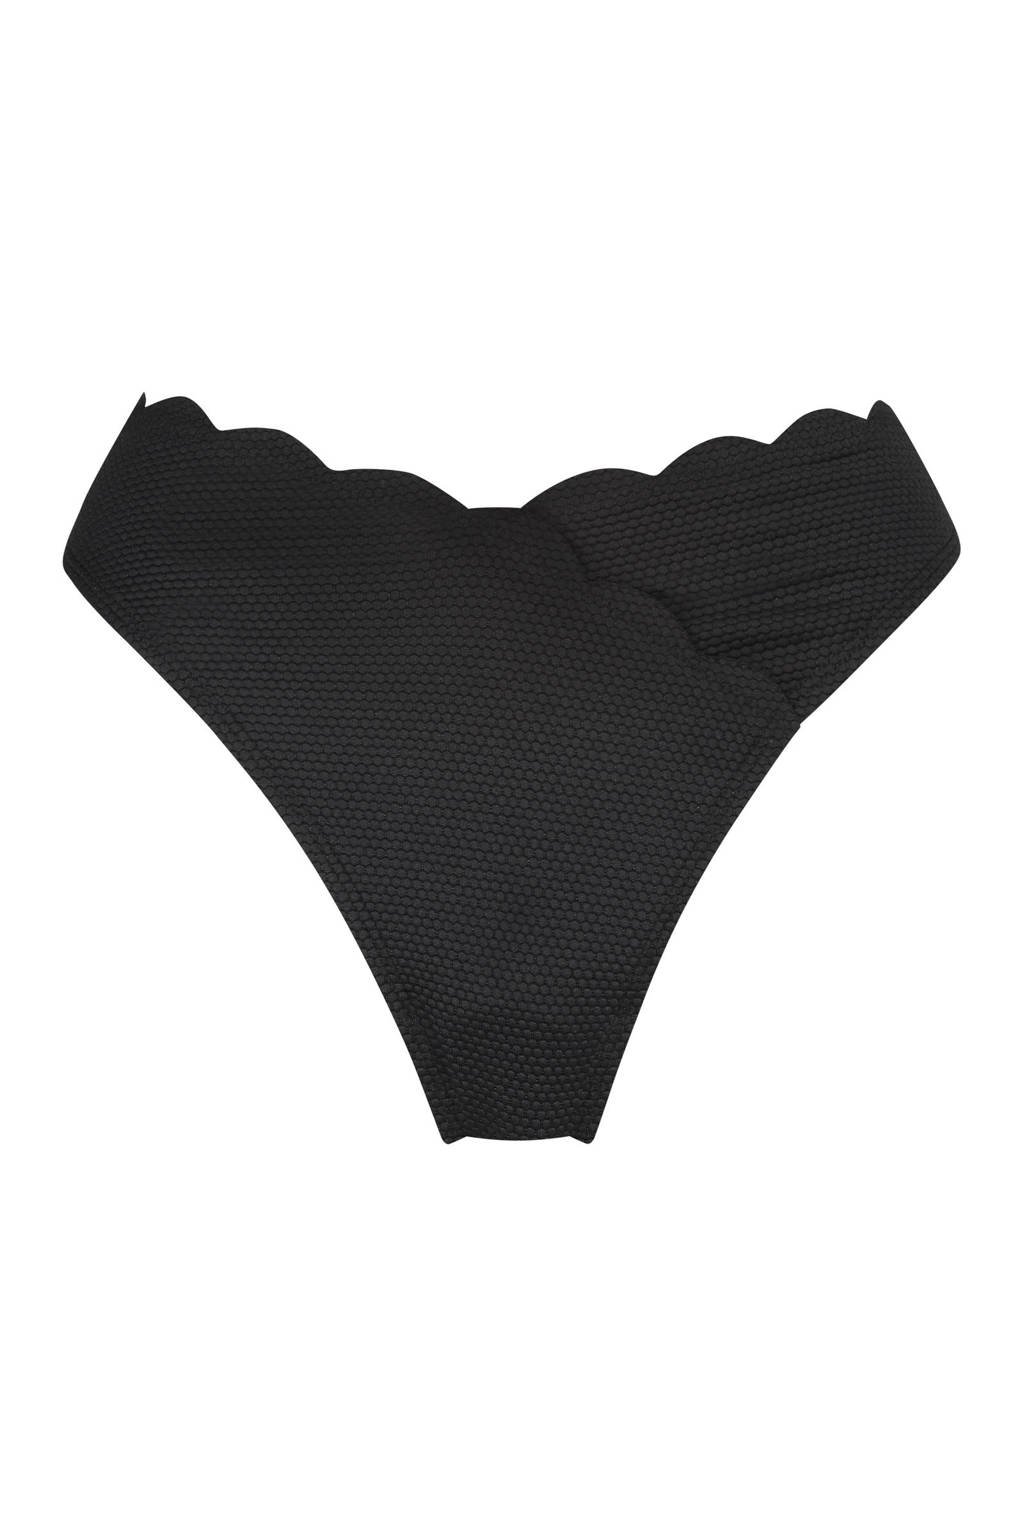 Hunkemöller high leg bikinibroekje Scallop met structuur zwart